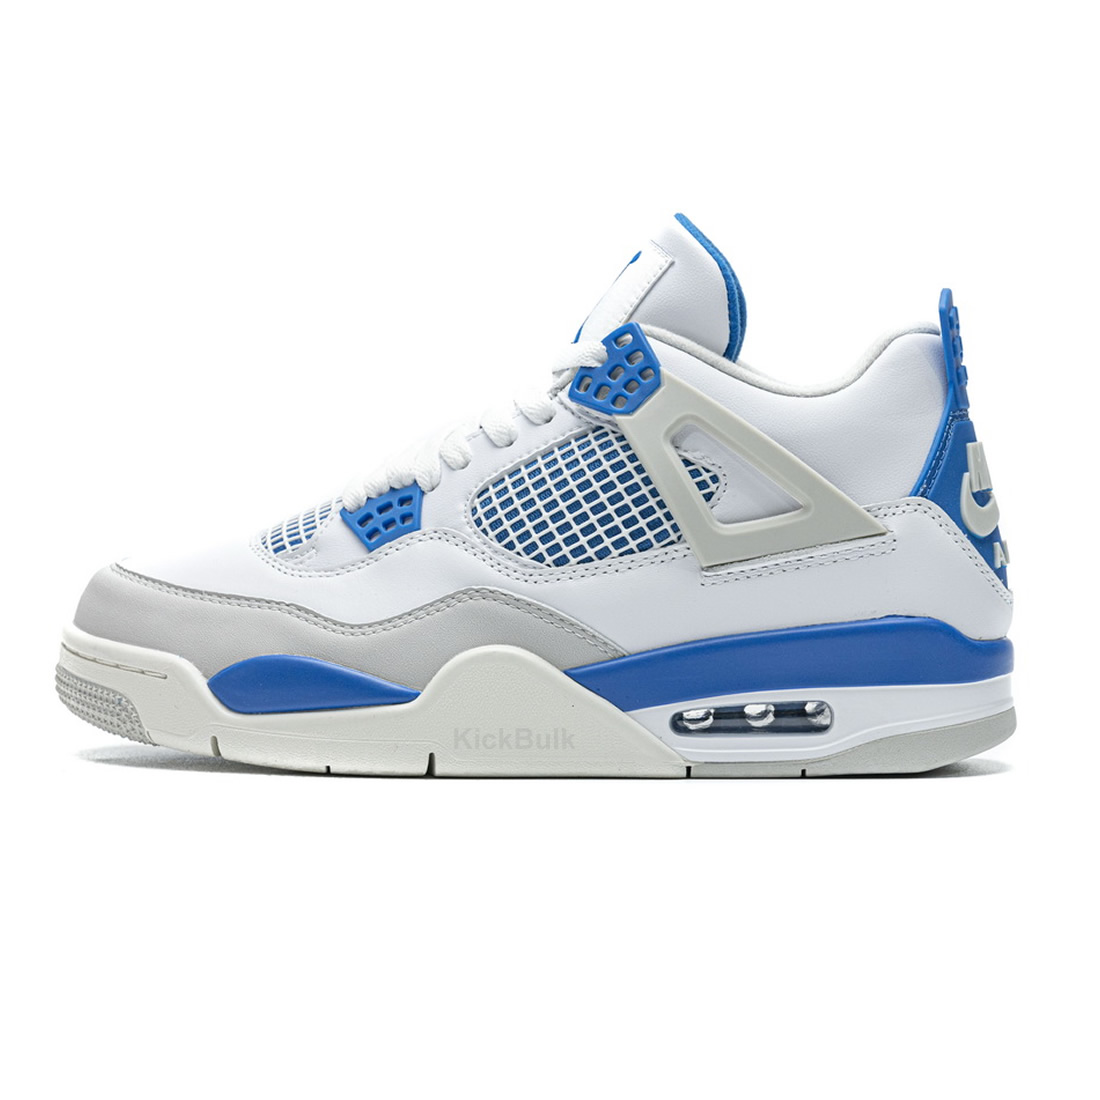 Nike Air Jordan 4 Retro Military Blue 308497 105 1 - www.kickbulk.cc